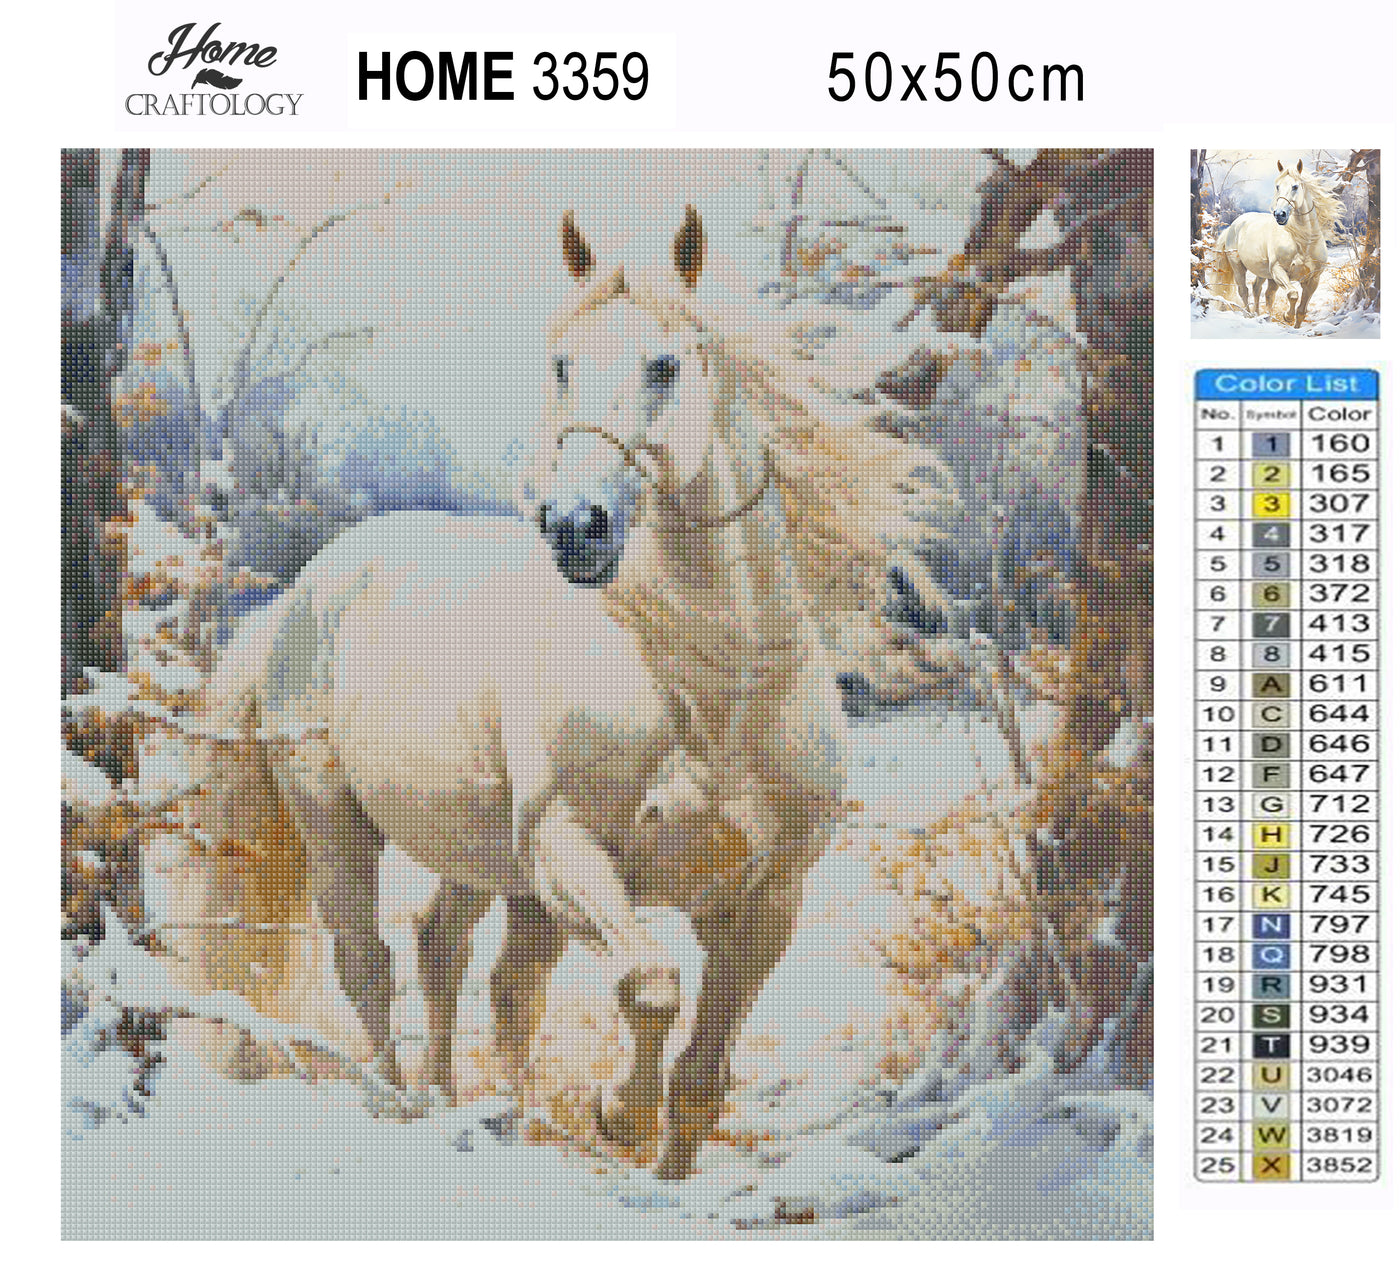 Horse in Winter - Premium Diamond Painting Kit